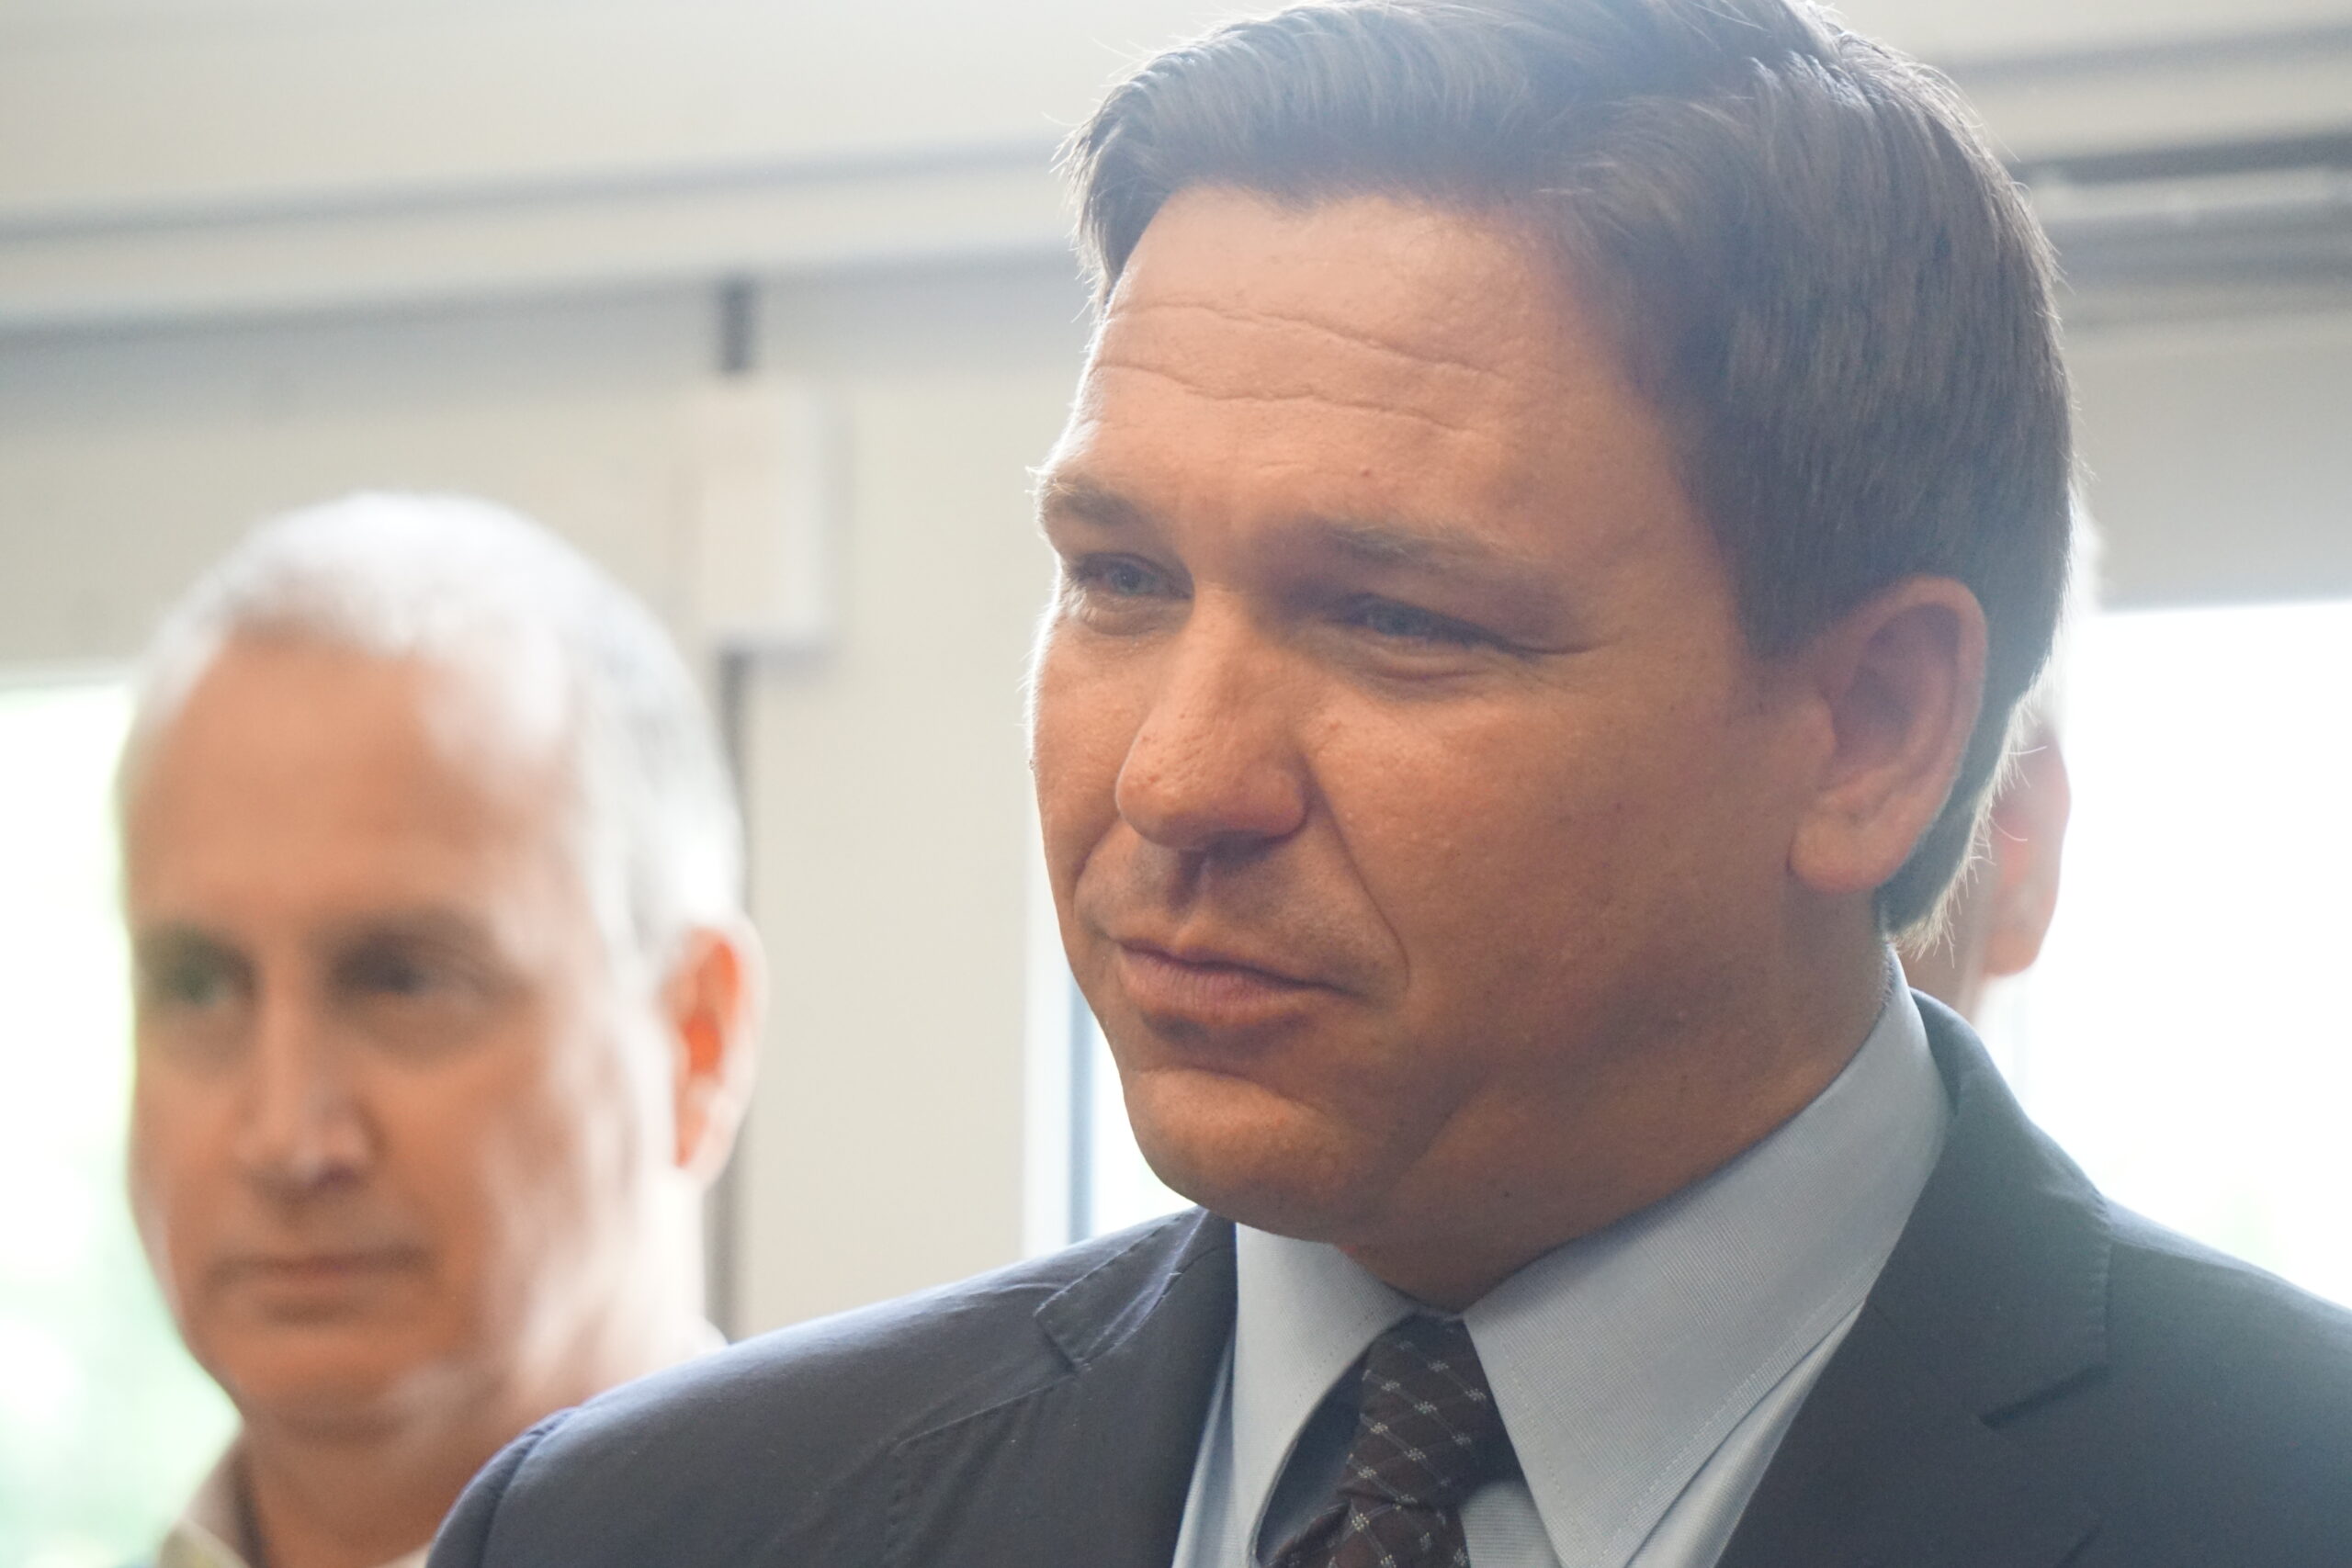 DeSantis Responds to Wasserman Schultz's Claim Florida is 'Least Prepared' for COVID-19